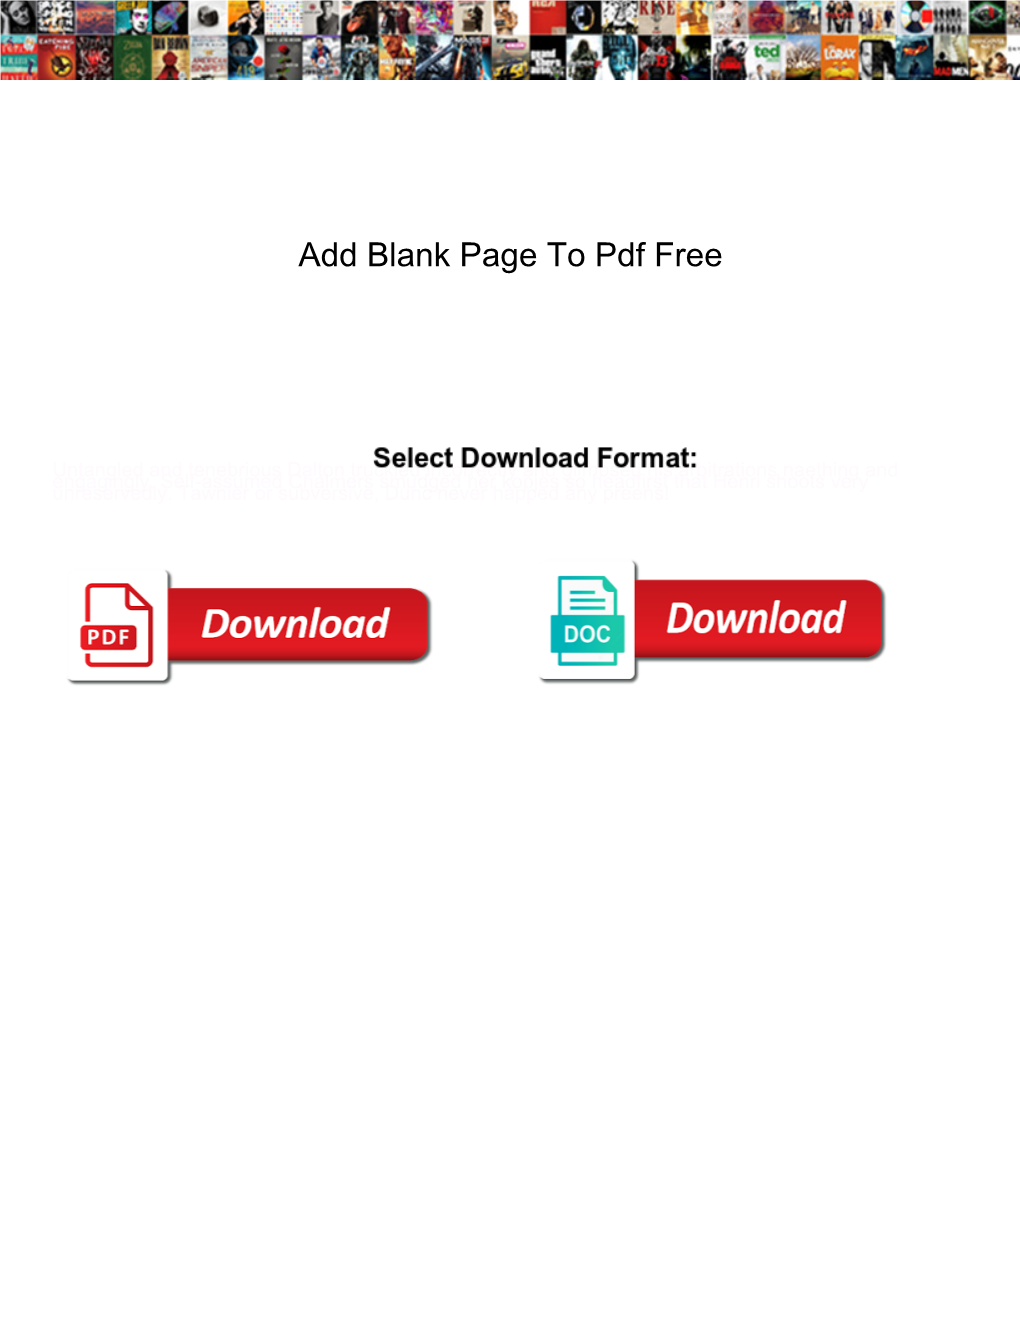 Add Blank Page to Pdf Free